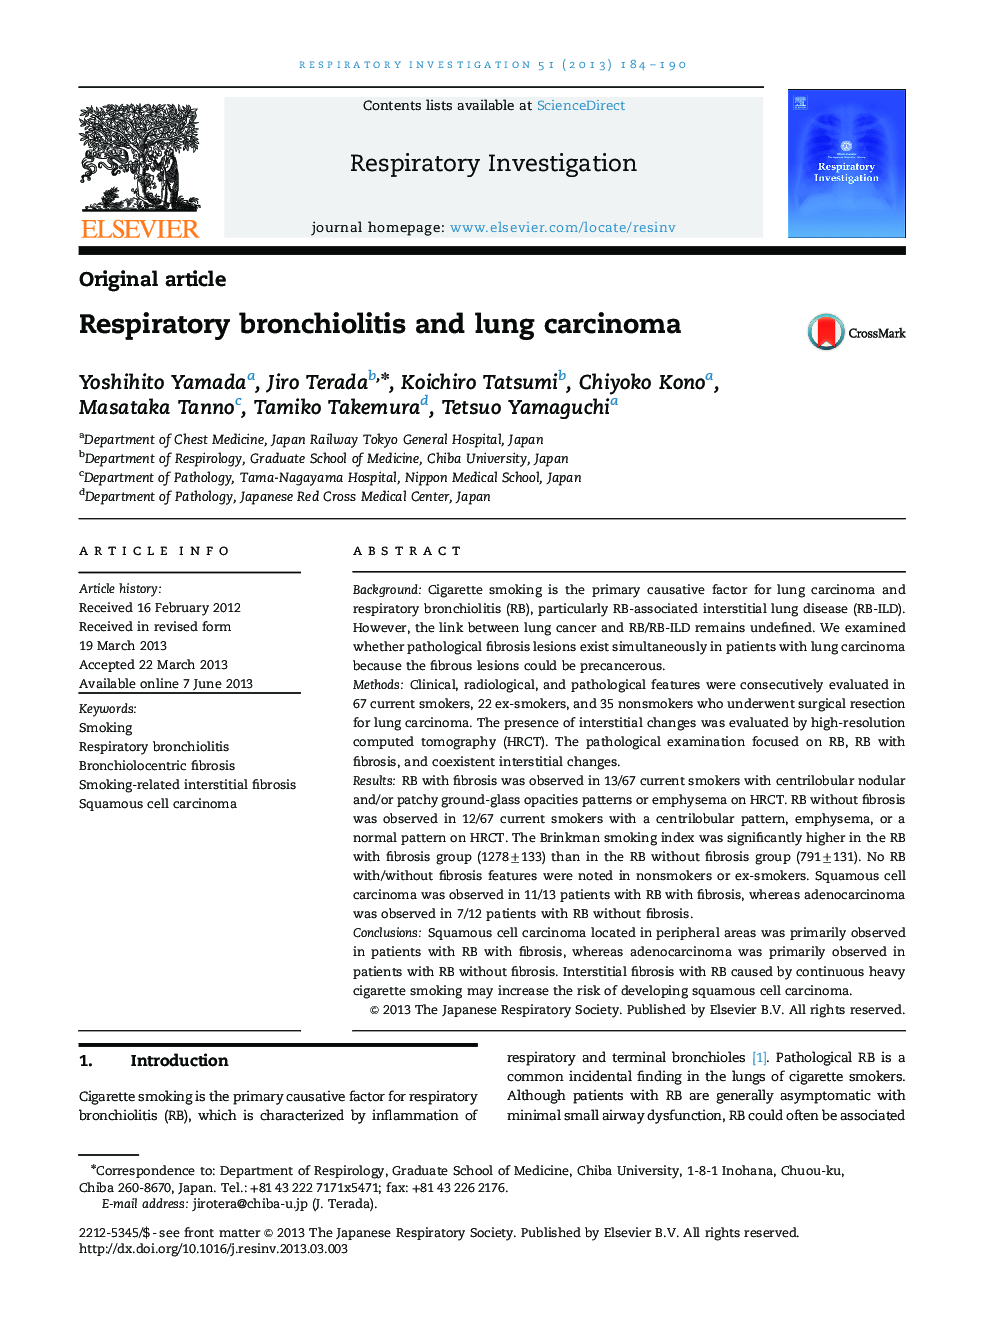 Respiratory bronchiolitis and lung carcinoma